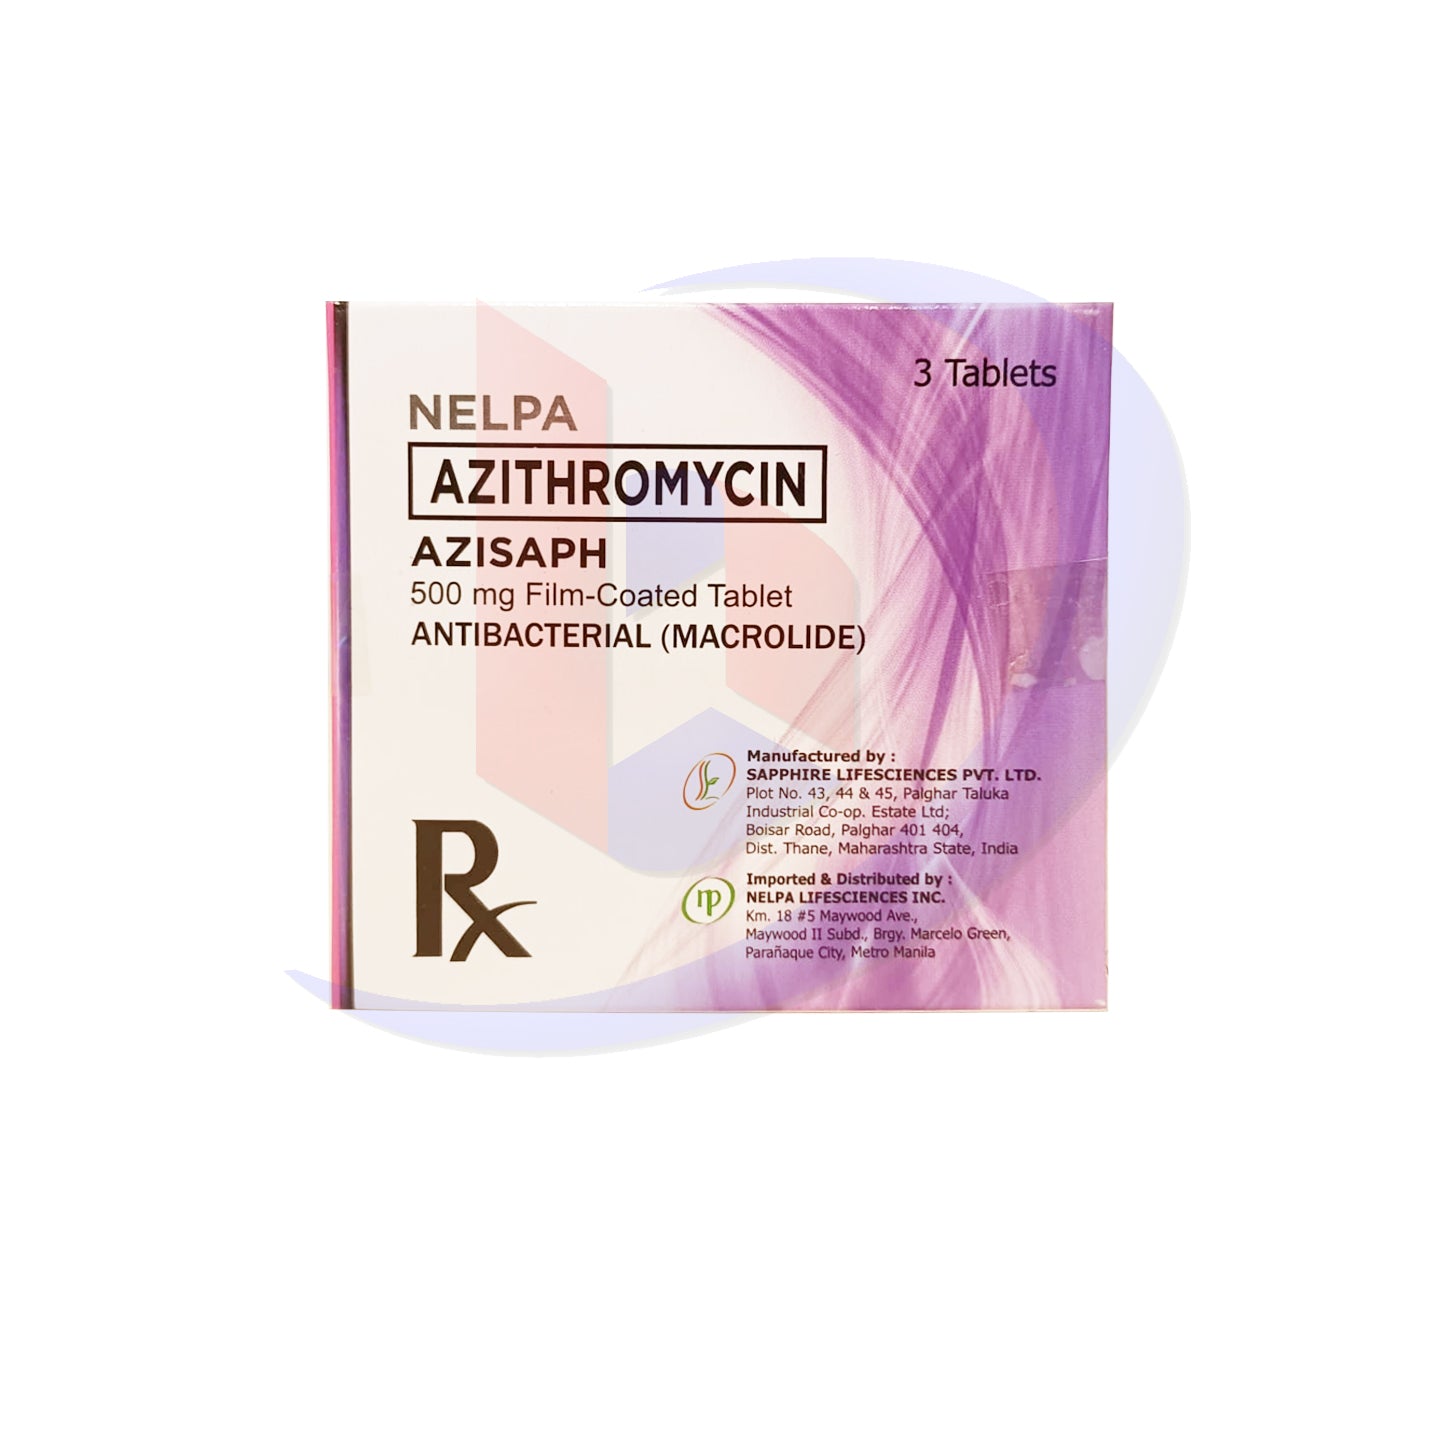 Azithromycin (Azisaph) 500mg Film Coated Tablet 3's